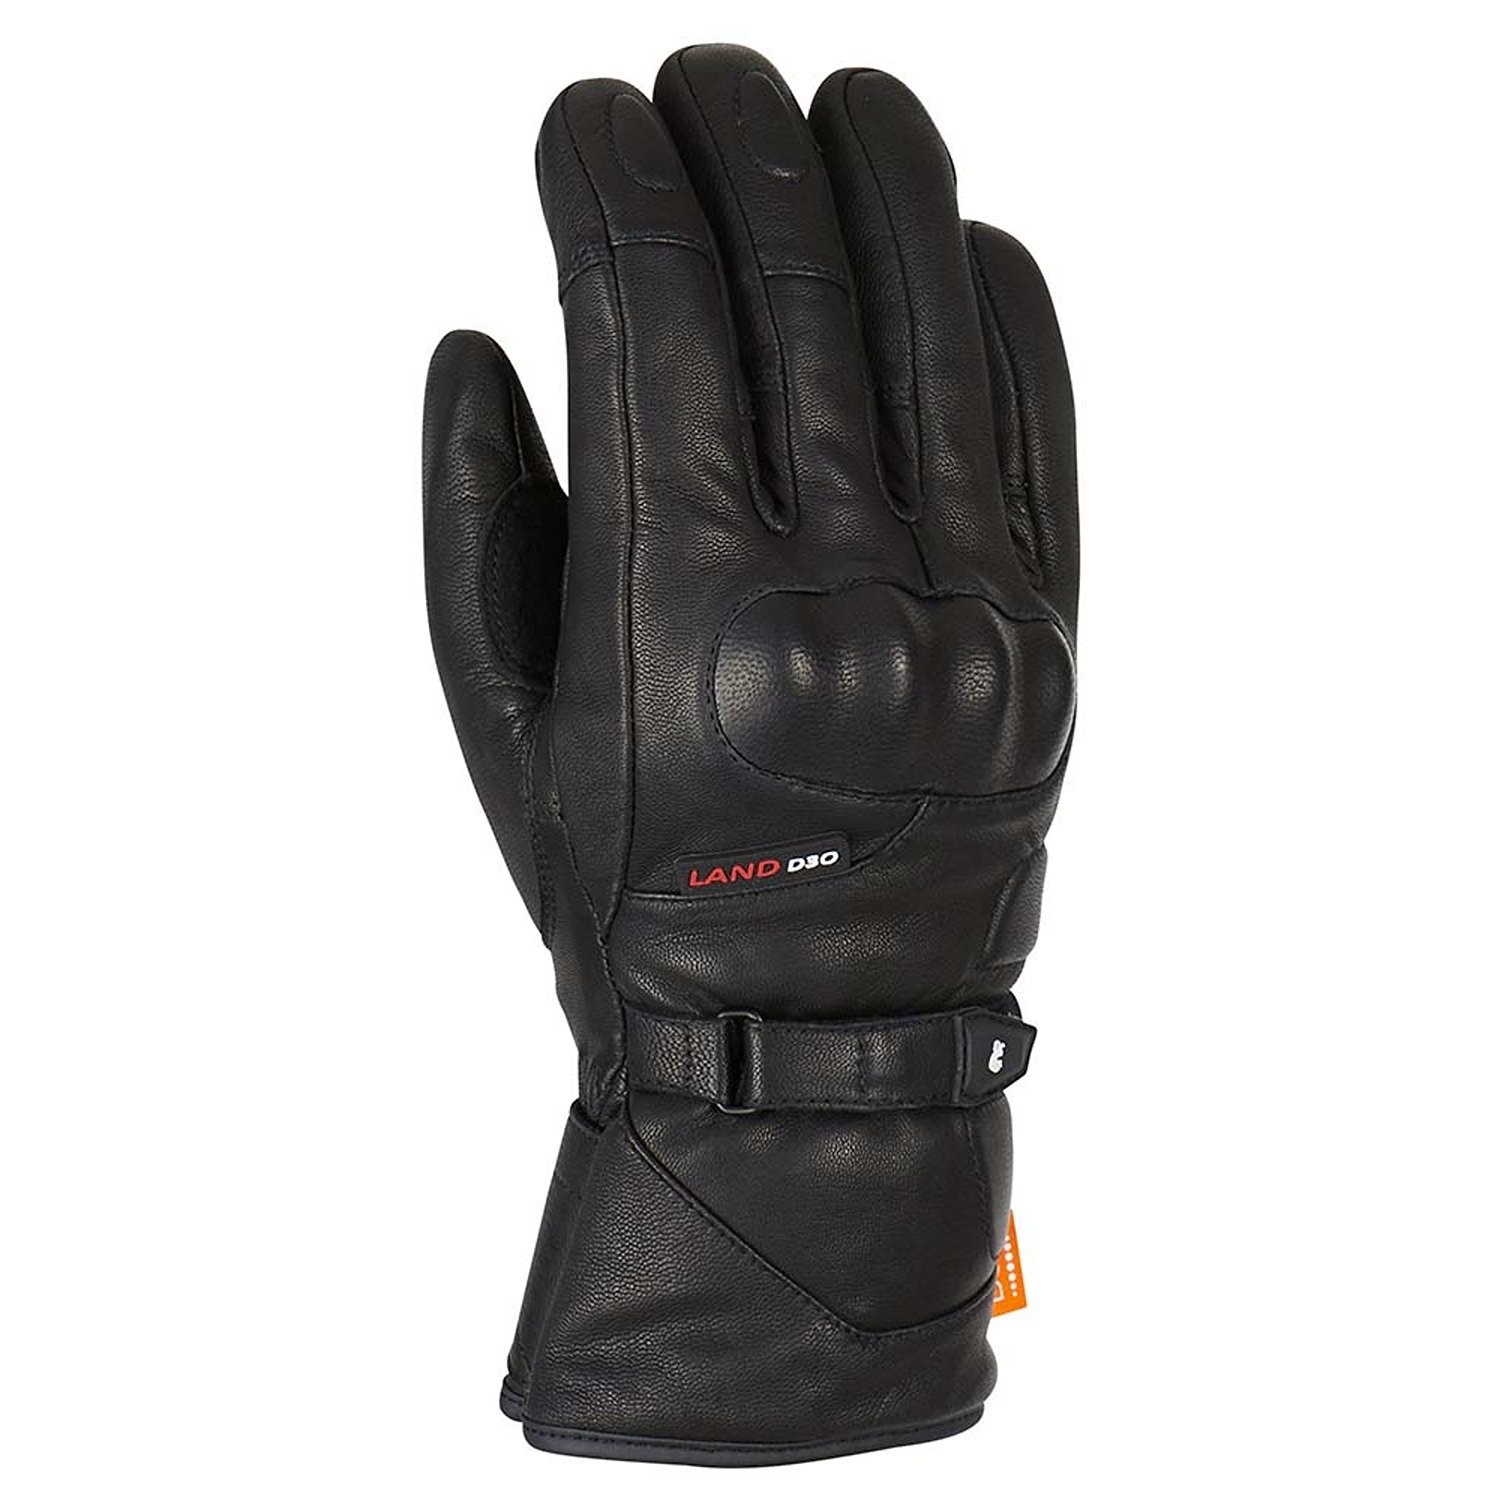 Image of Furygan Land DK D30 Gloves Black Size 3XL EN